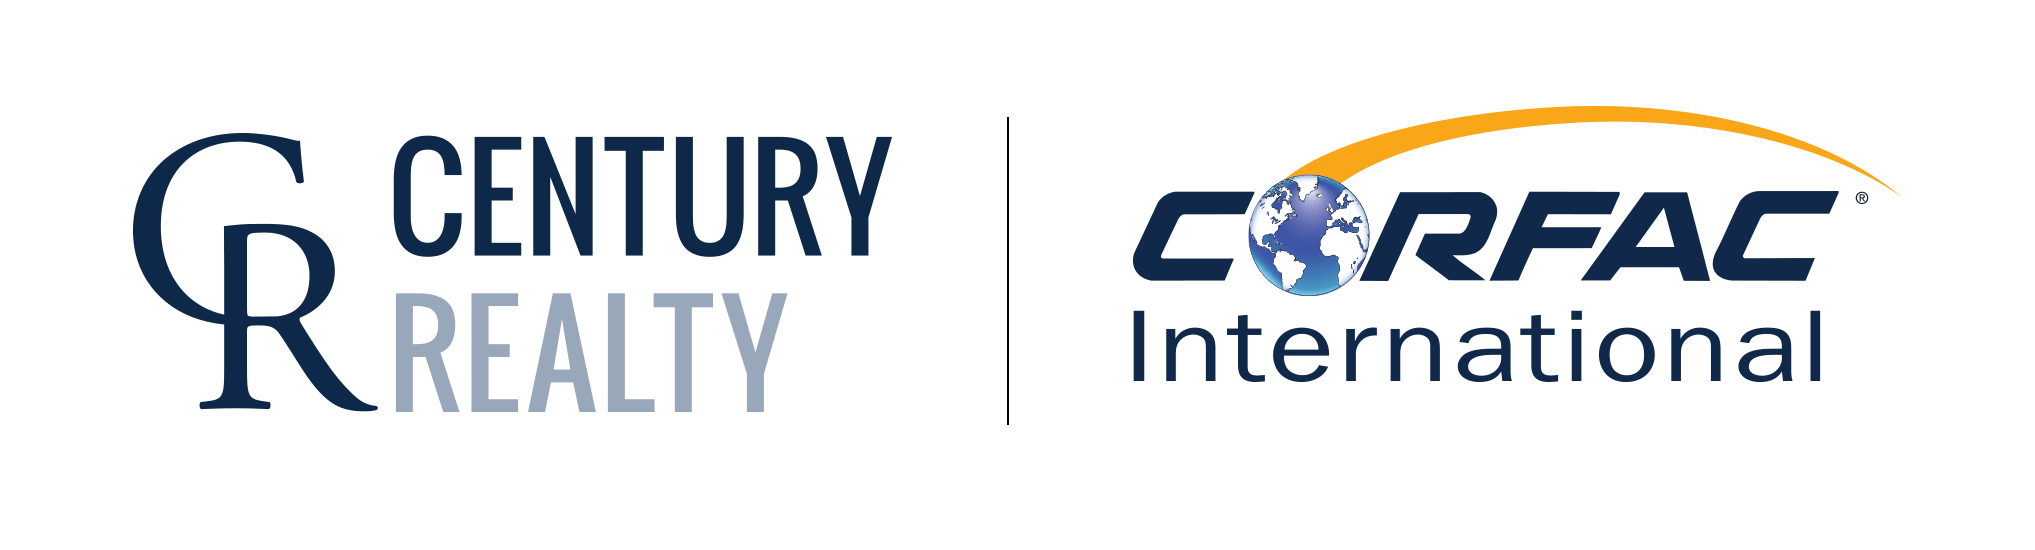 Century Realty | Commercial Advisors Century Realty